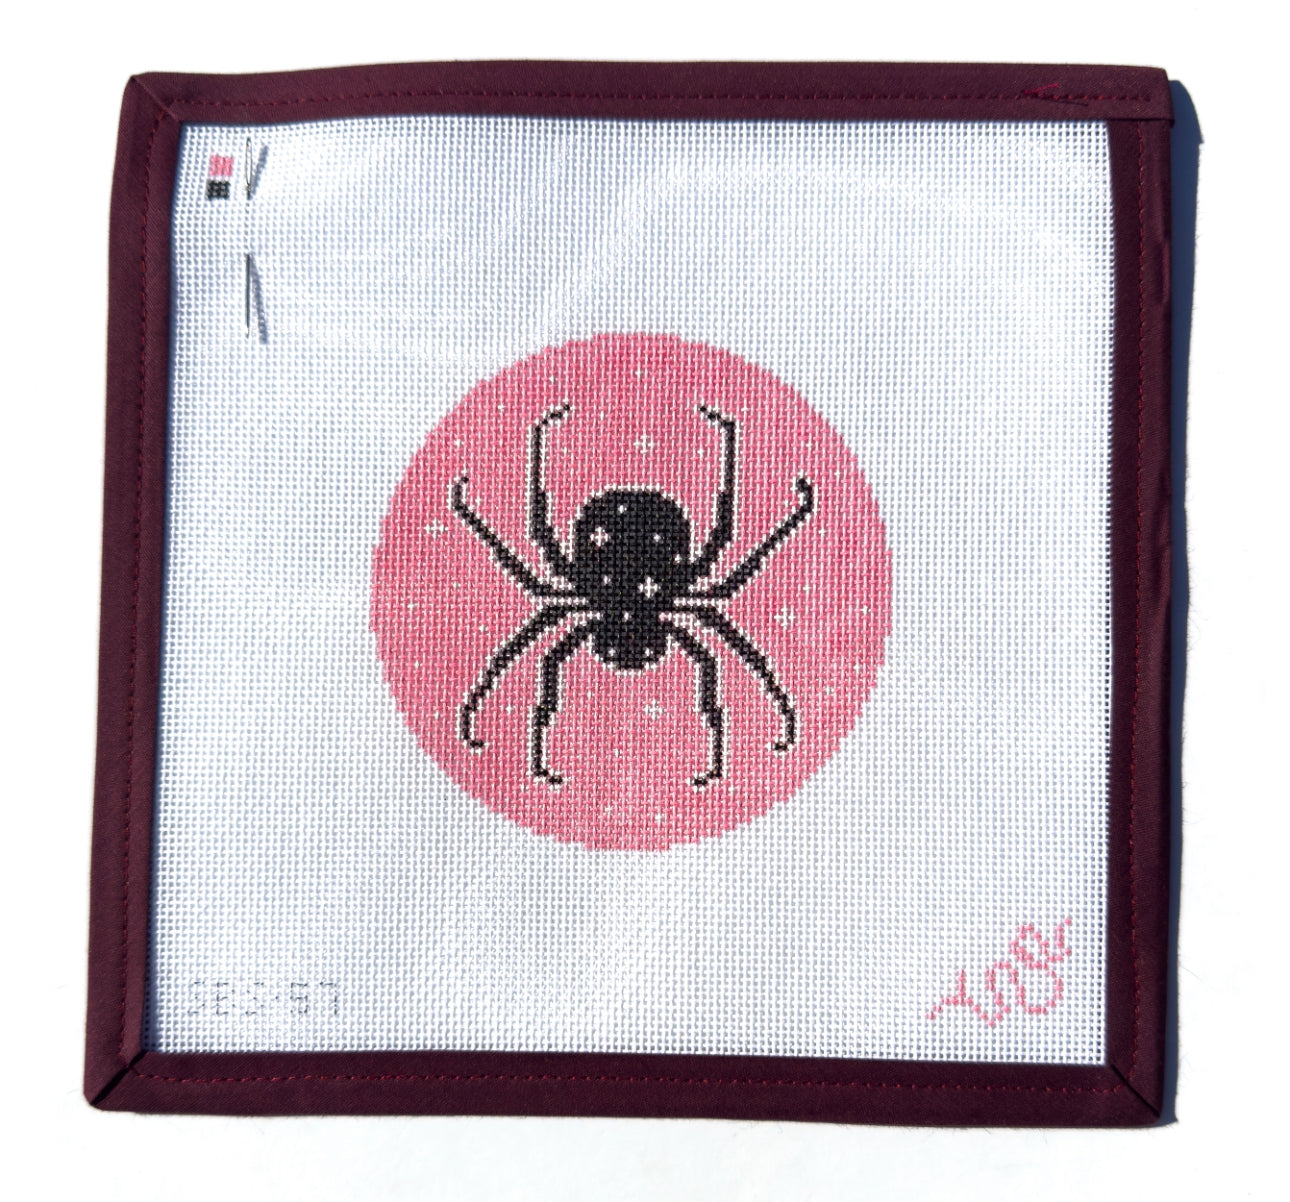 Celestial Spider Needlepoint Canvas